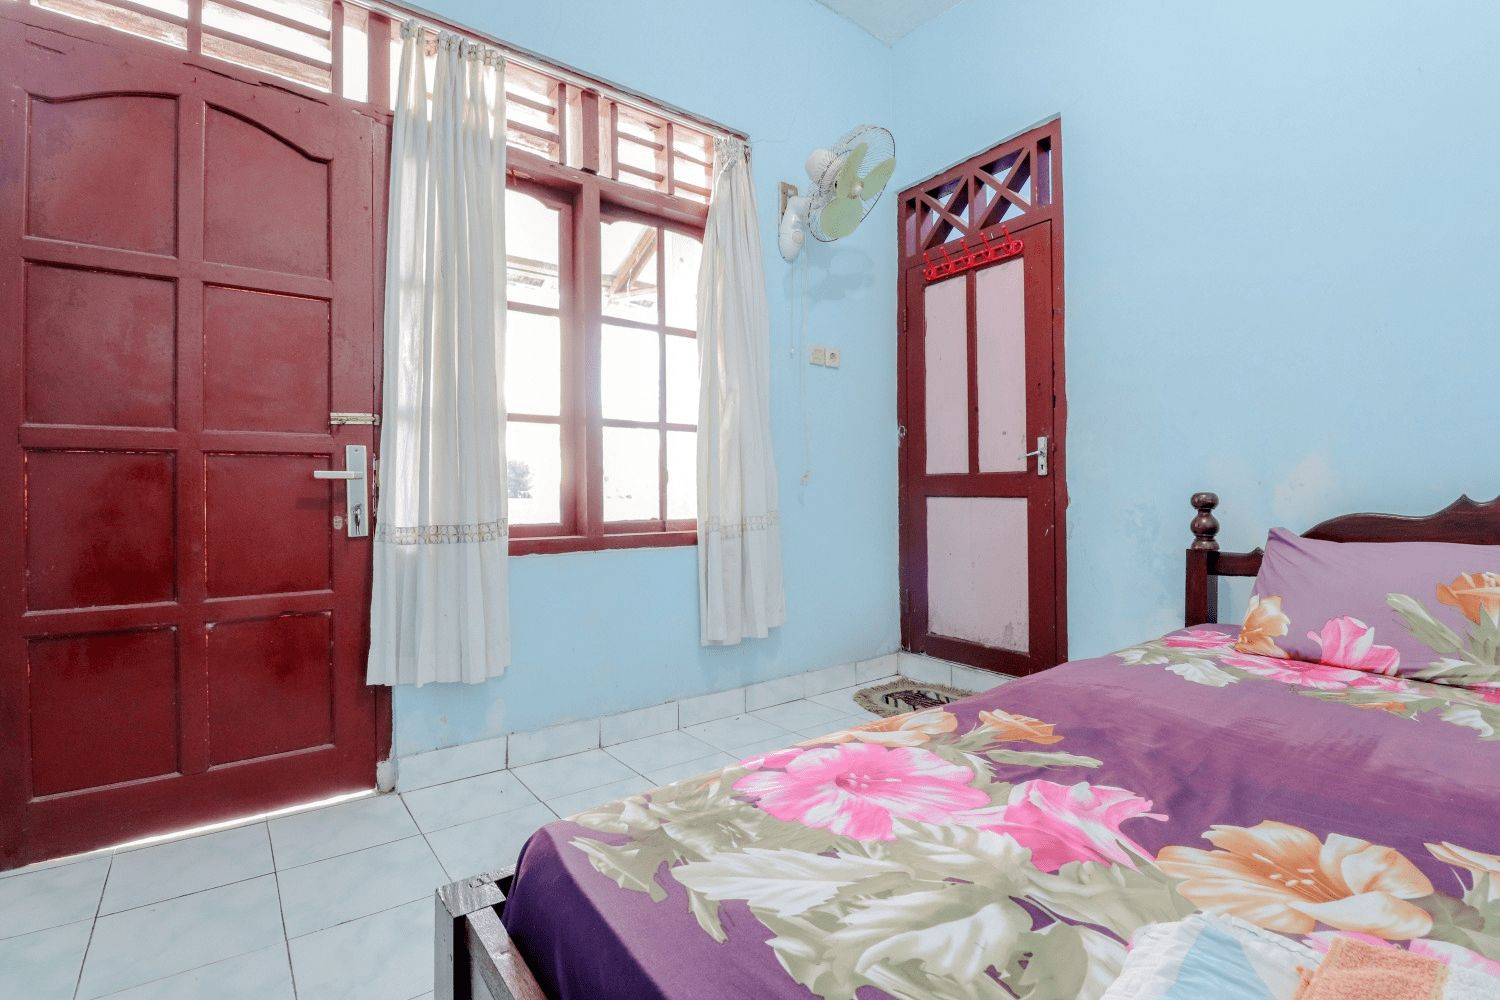 Bedroom 1, Losmen Parikesit, Bantul